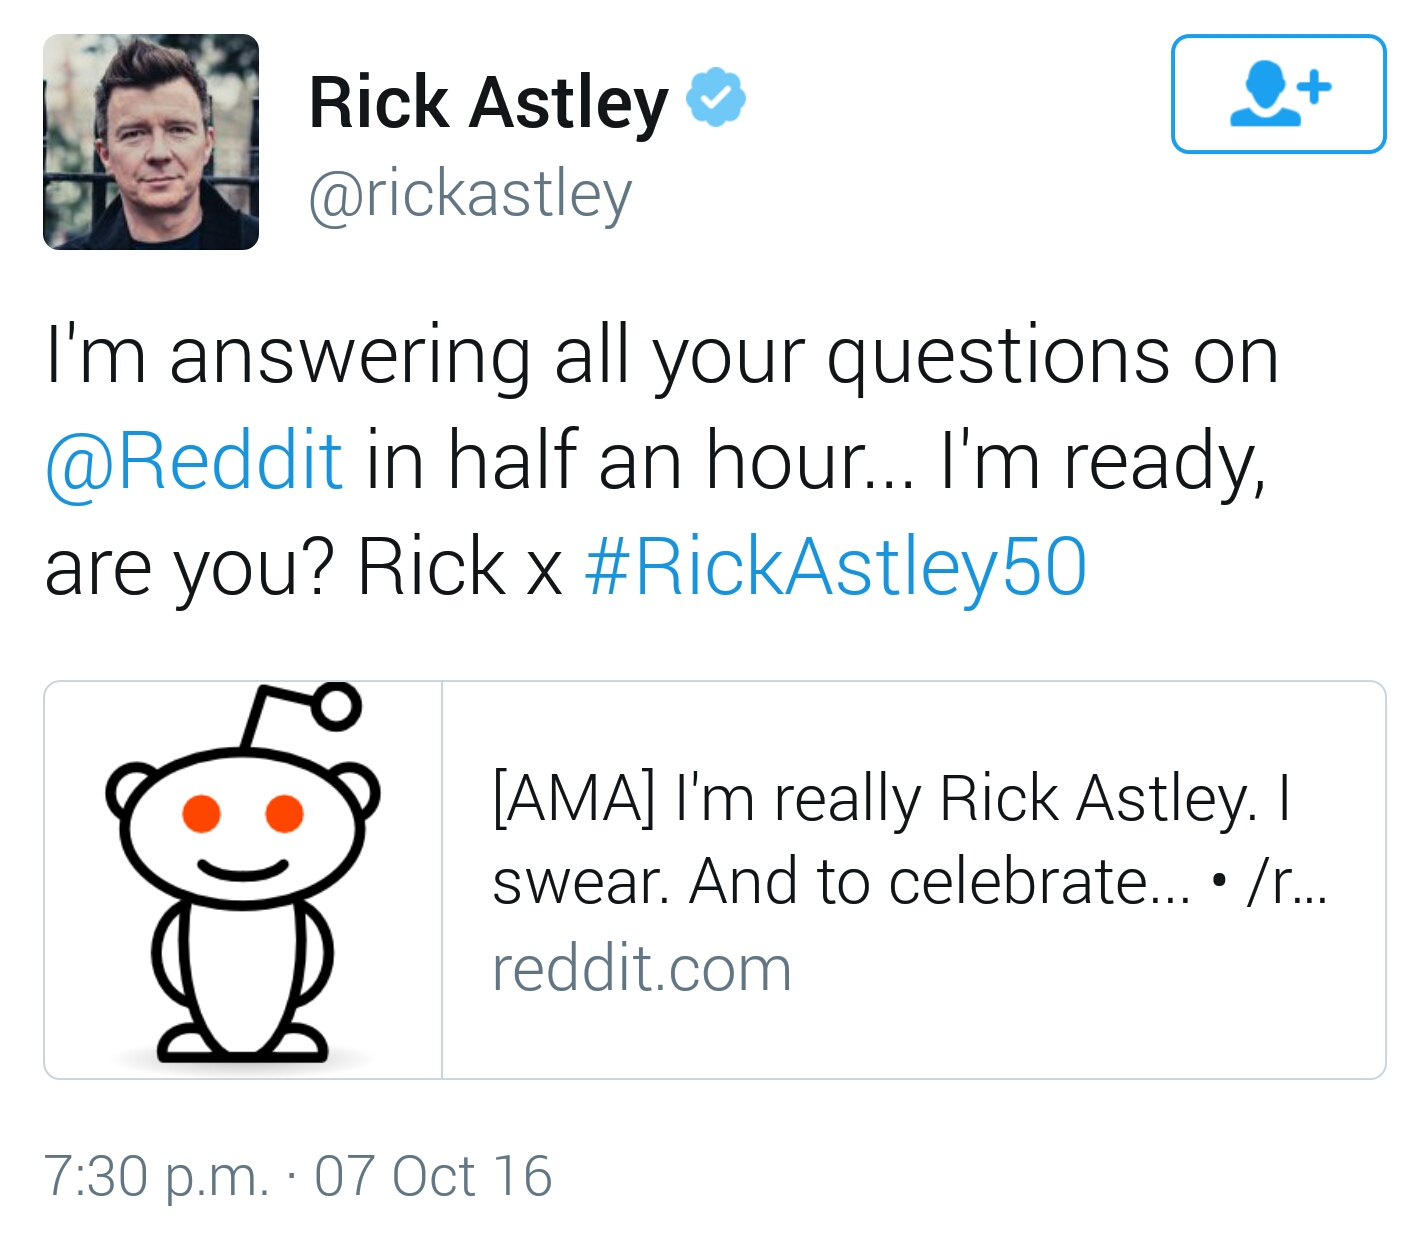 Rick Astley AMA Goes Awry